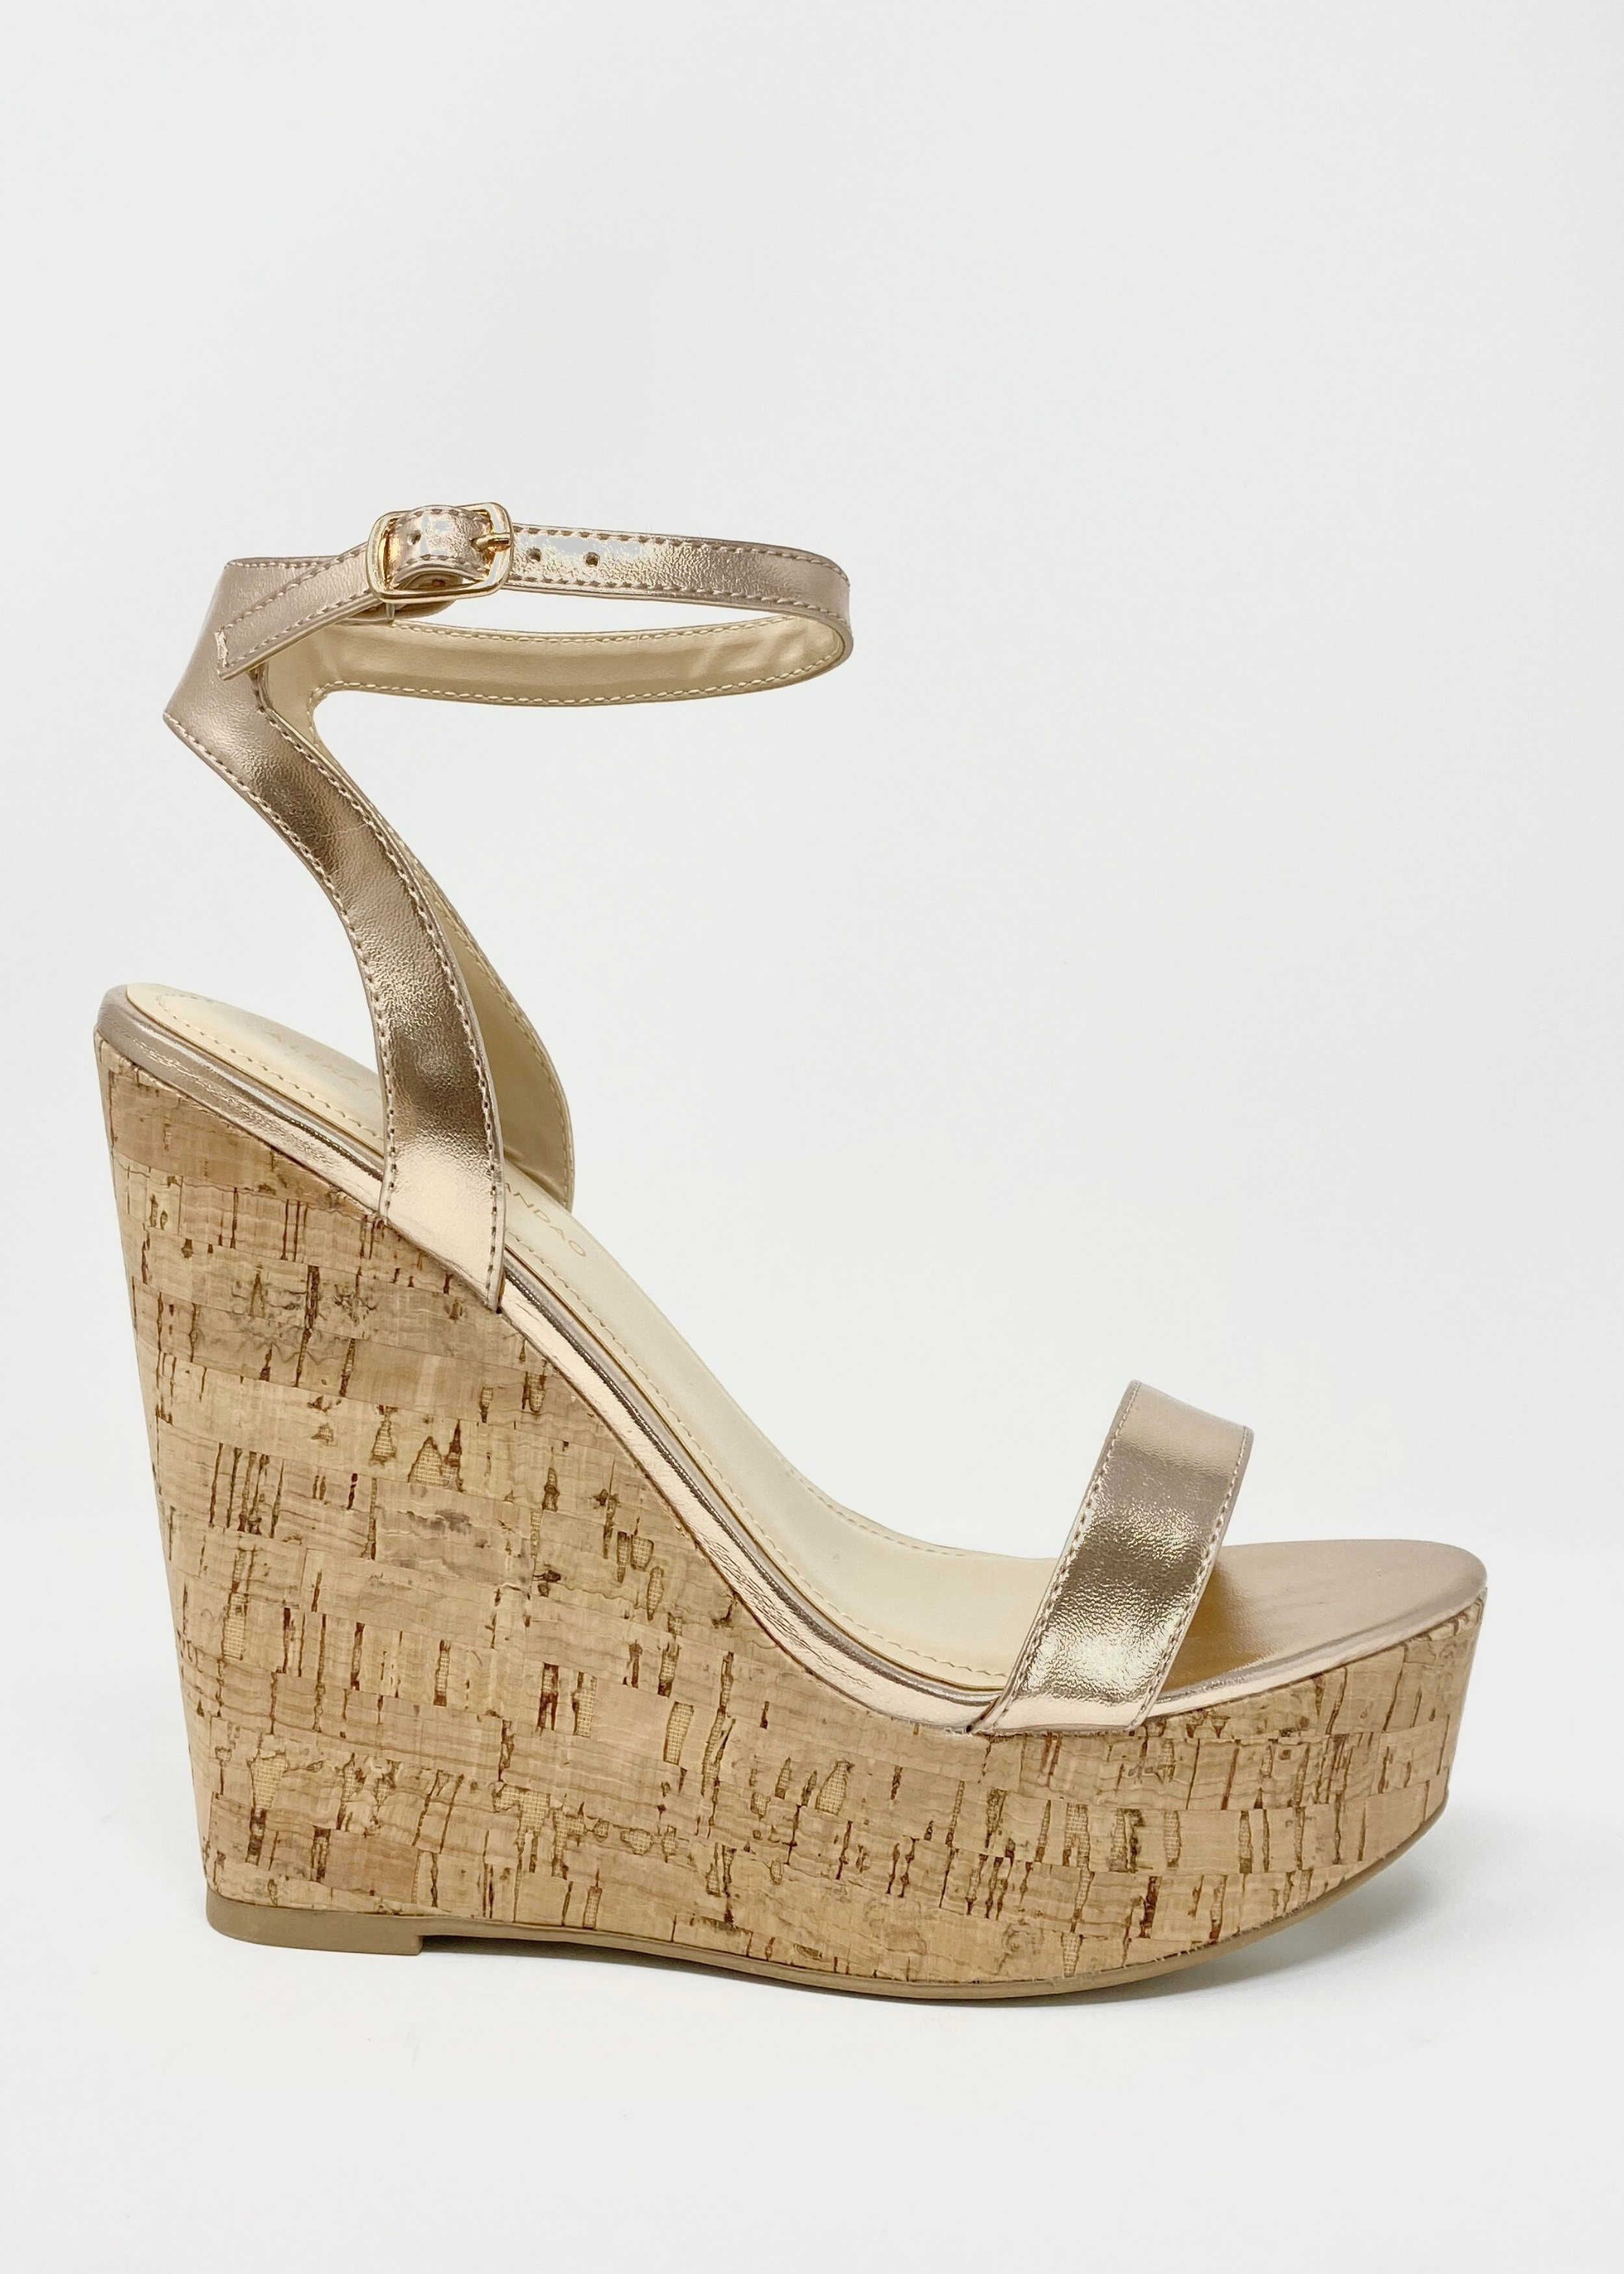 Liz Claiborne Gold Metallic Wedge Platform Dress Sandals•T-Strap Shoes•Sz  9.5M | eBay